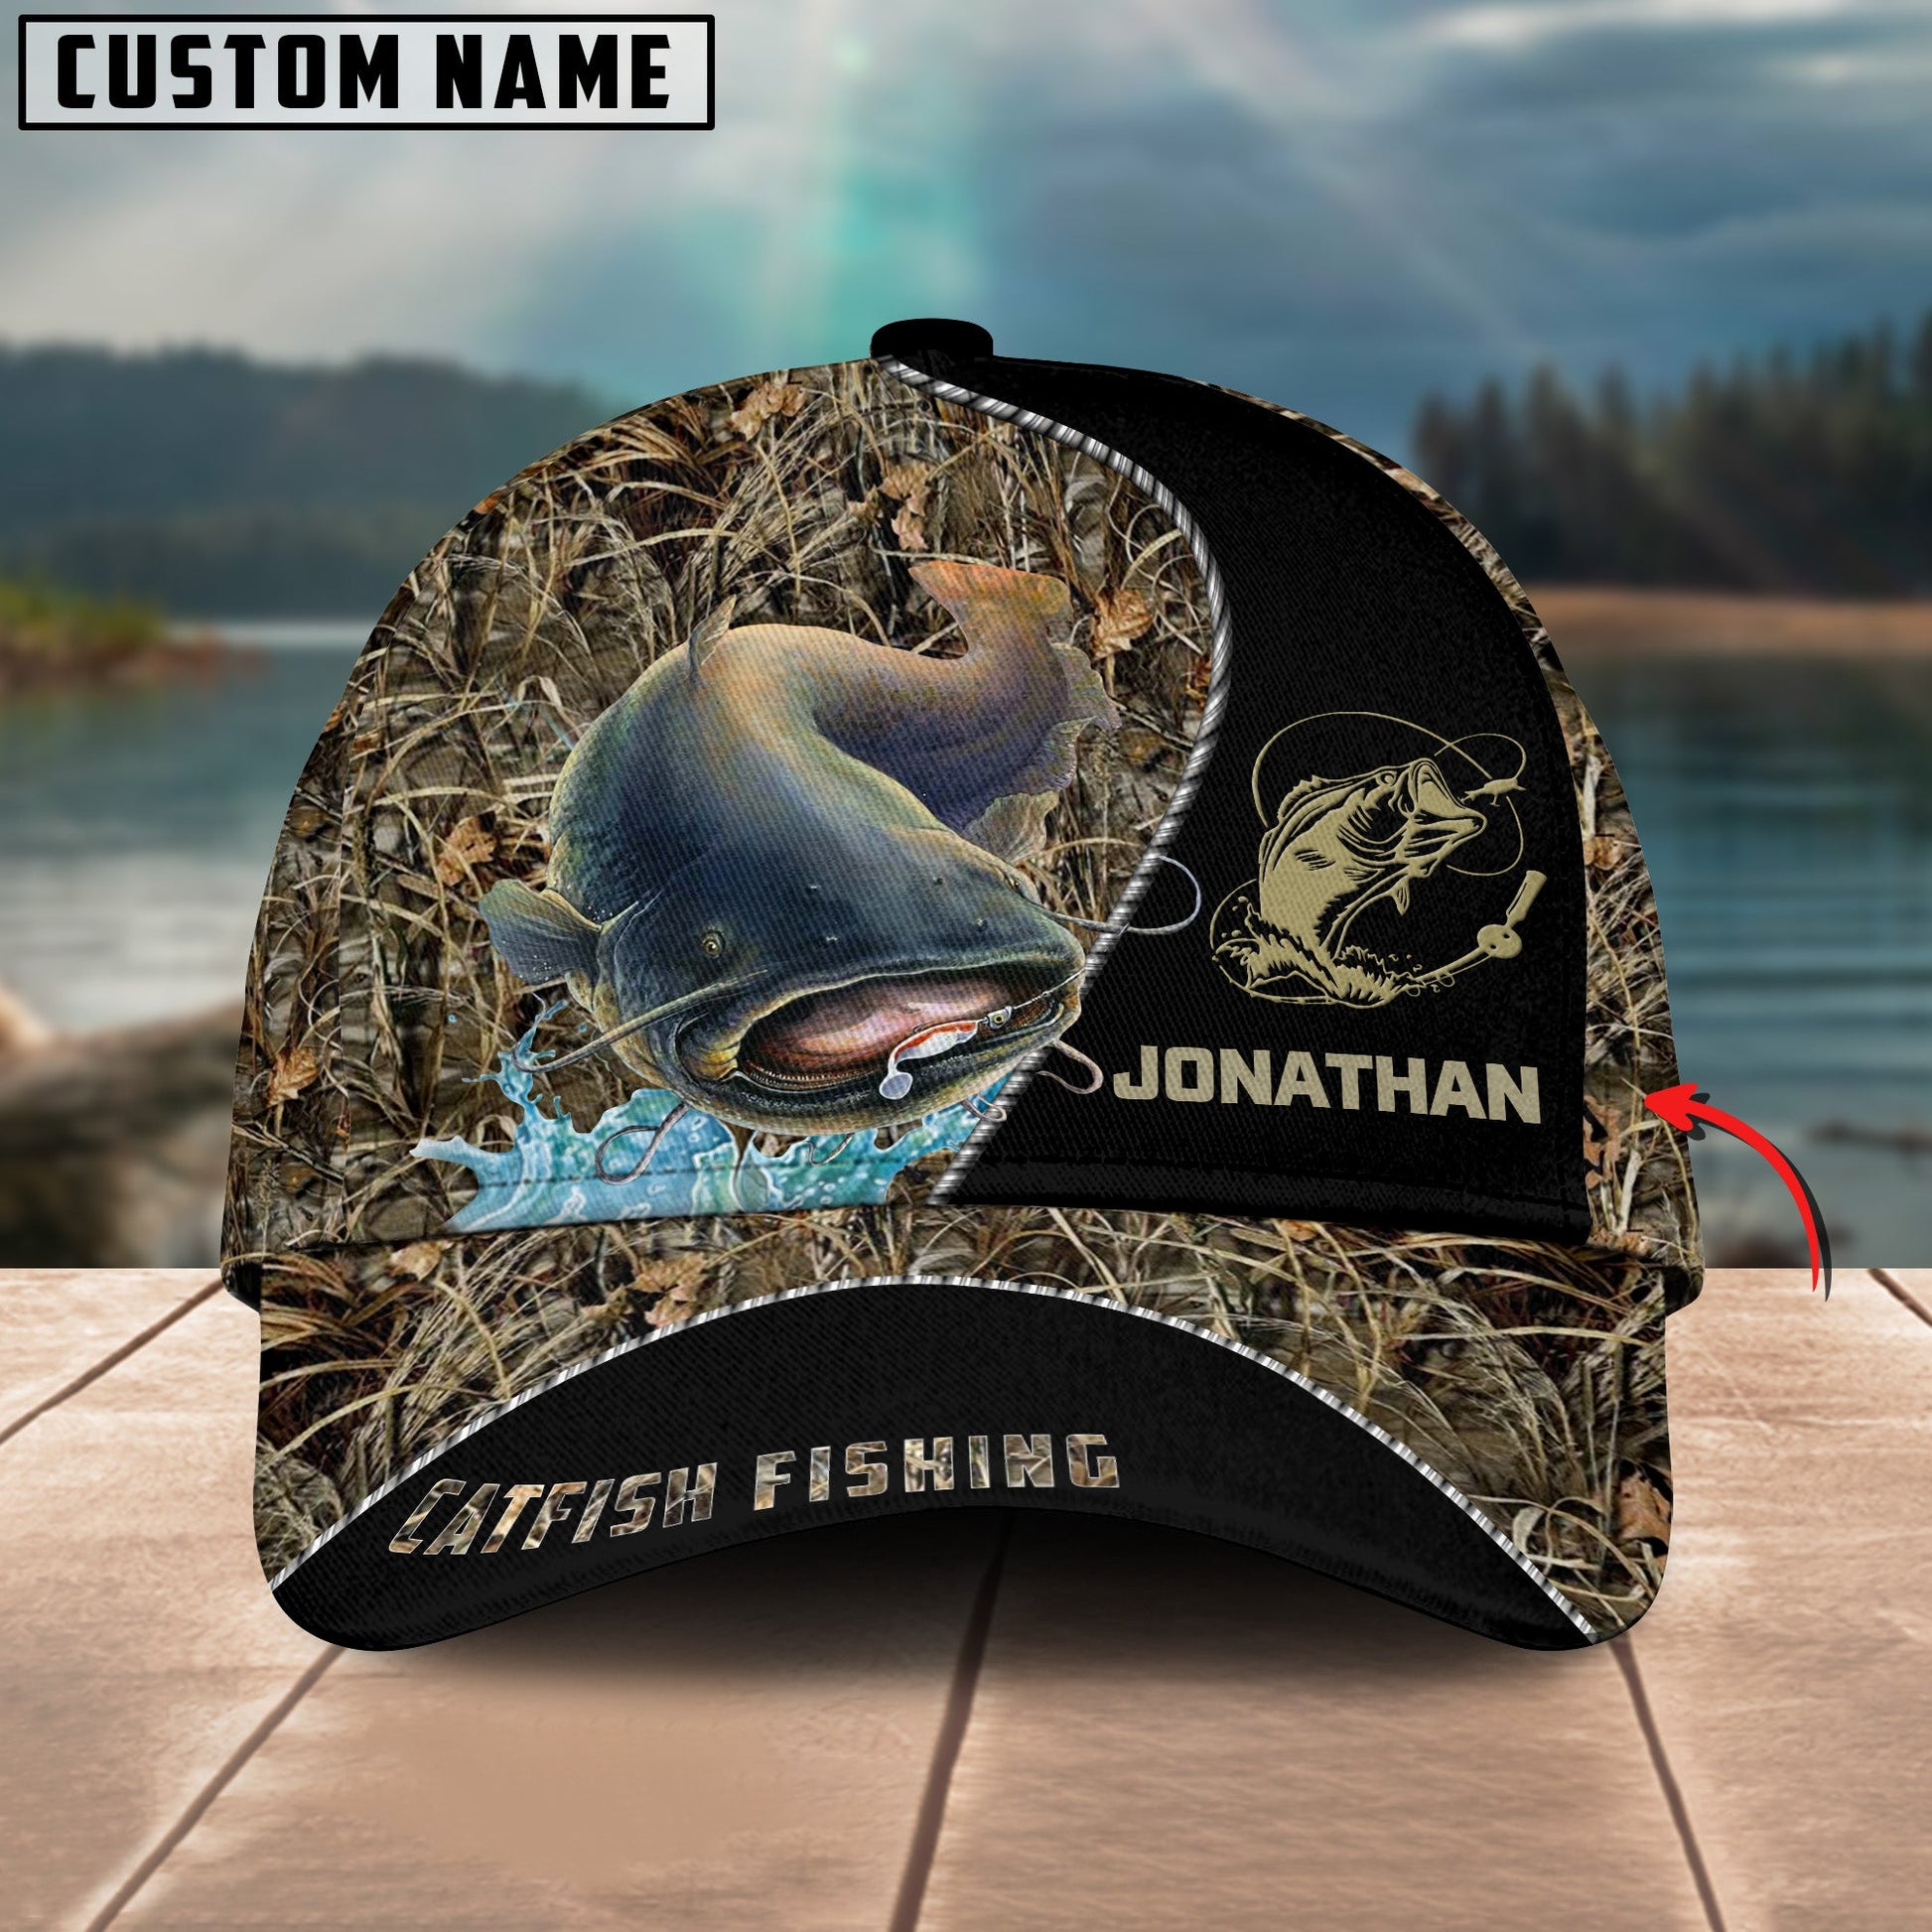 BlueJose Catfish Fishing Personalized Cap – Blue Jose